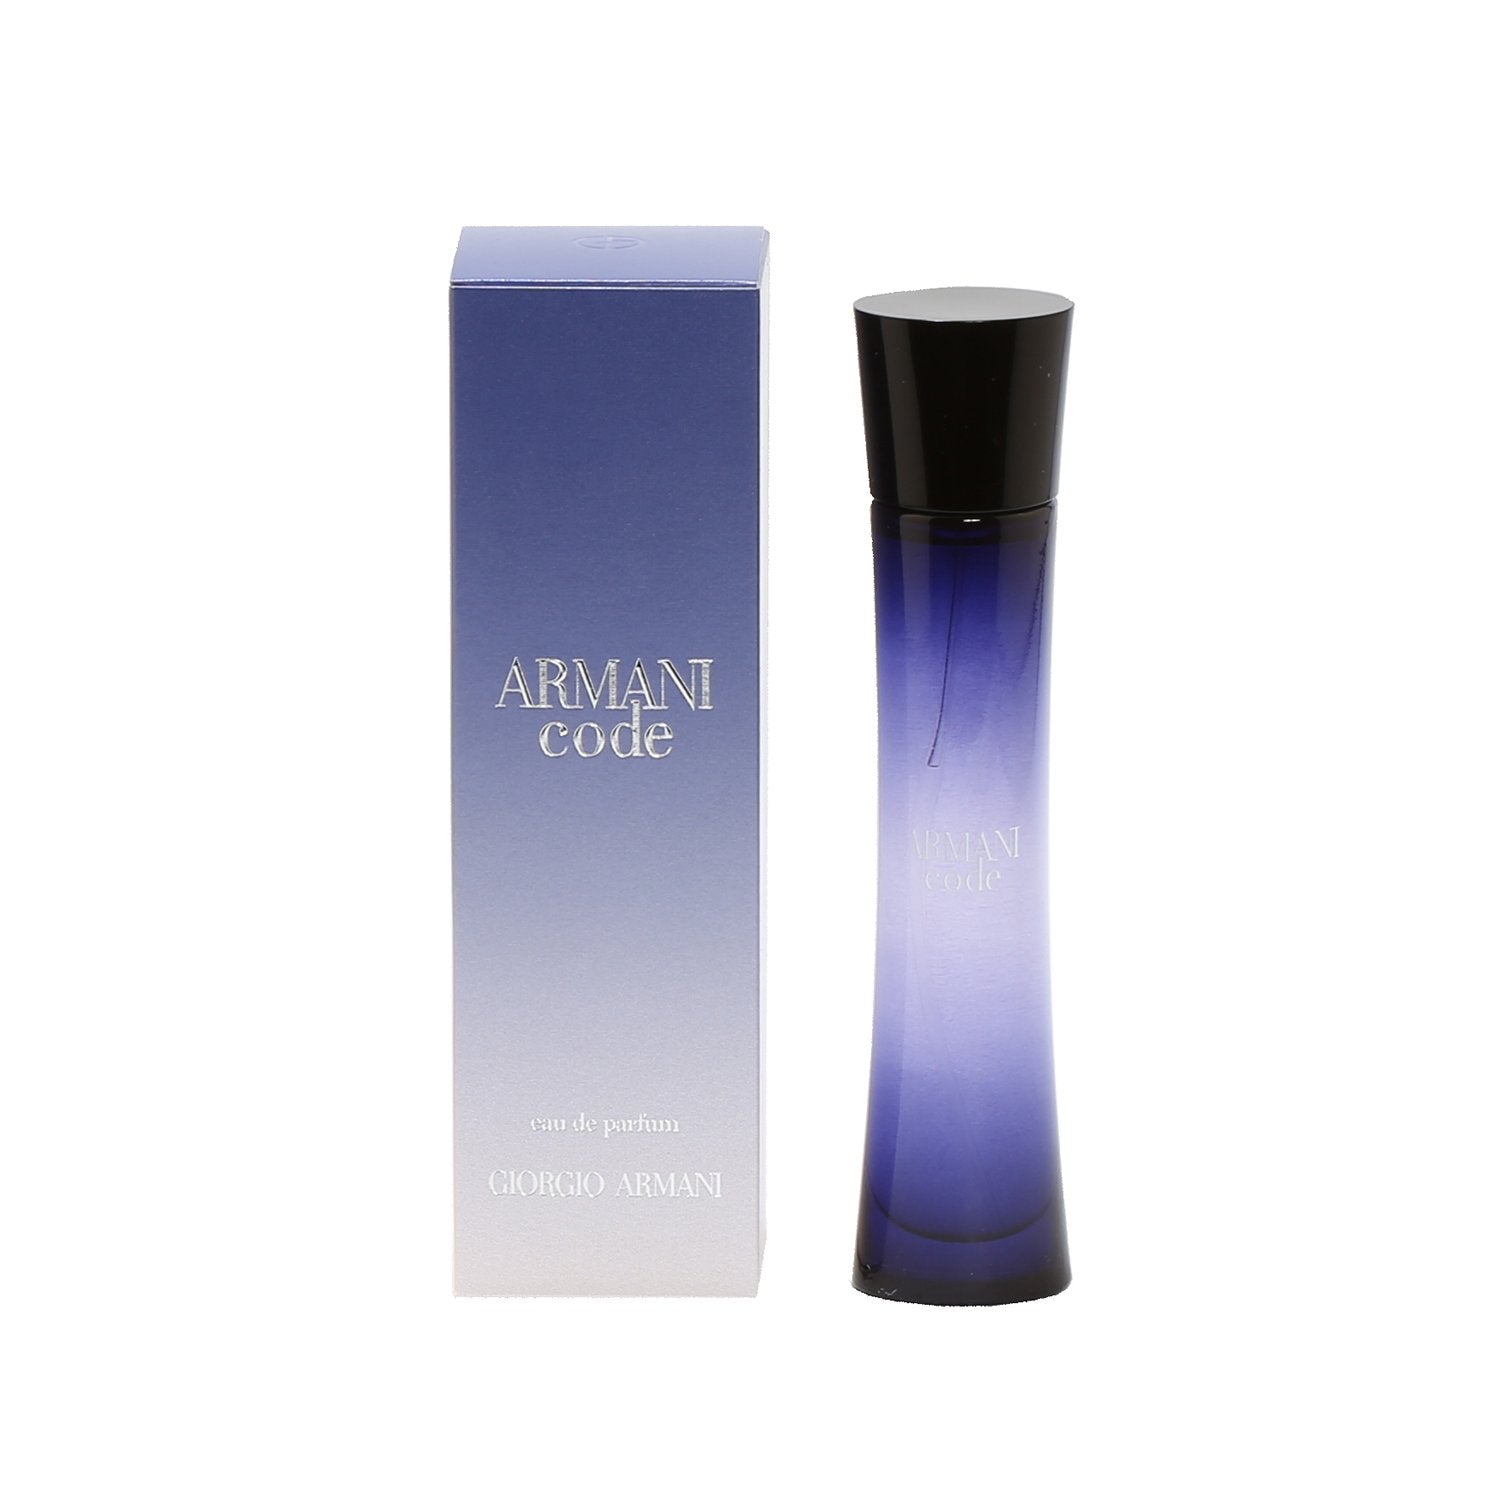 Perfume - ARMANI CODE FOR WOMEN BY GIORGIO ARMANI - EAU DE PARFUM SPRAY